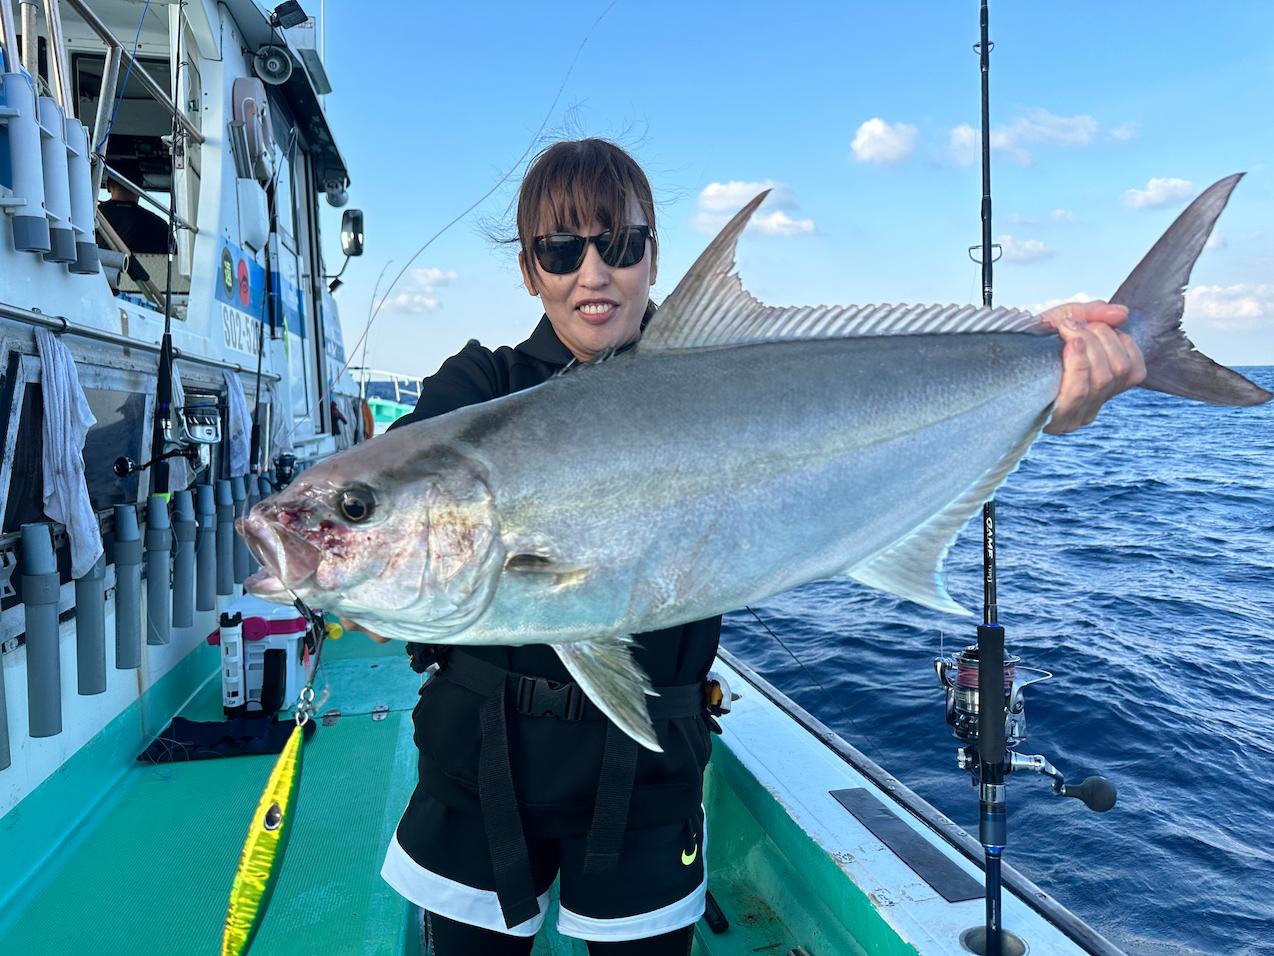 Offshore fishing. Fishing for “Goldic” off the southern coast of the Izu Islands in autumn. Aiming for Kampachi, Hiramasa, and Yellowfin tuna.